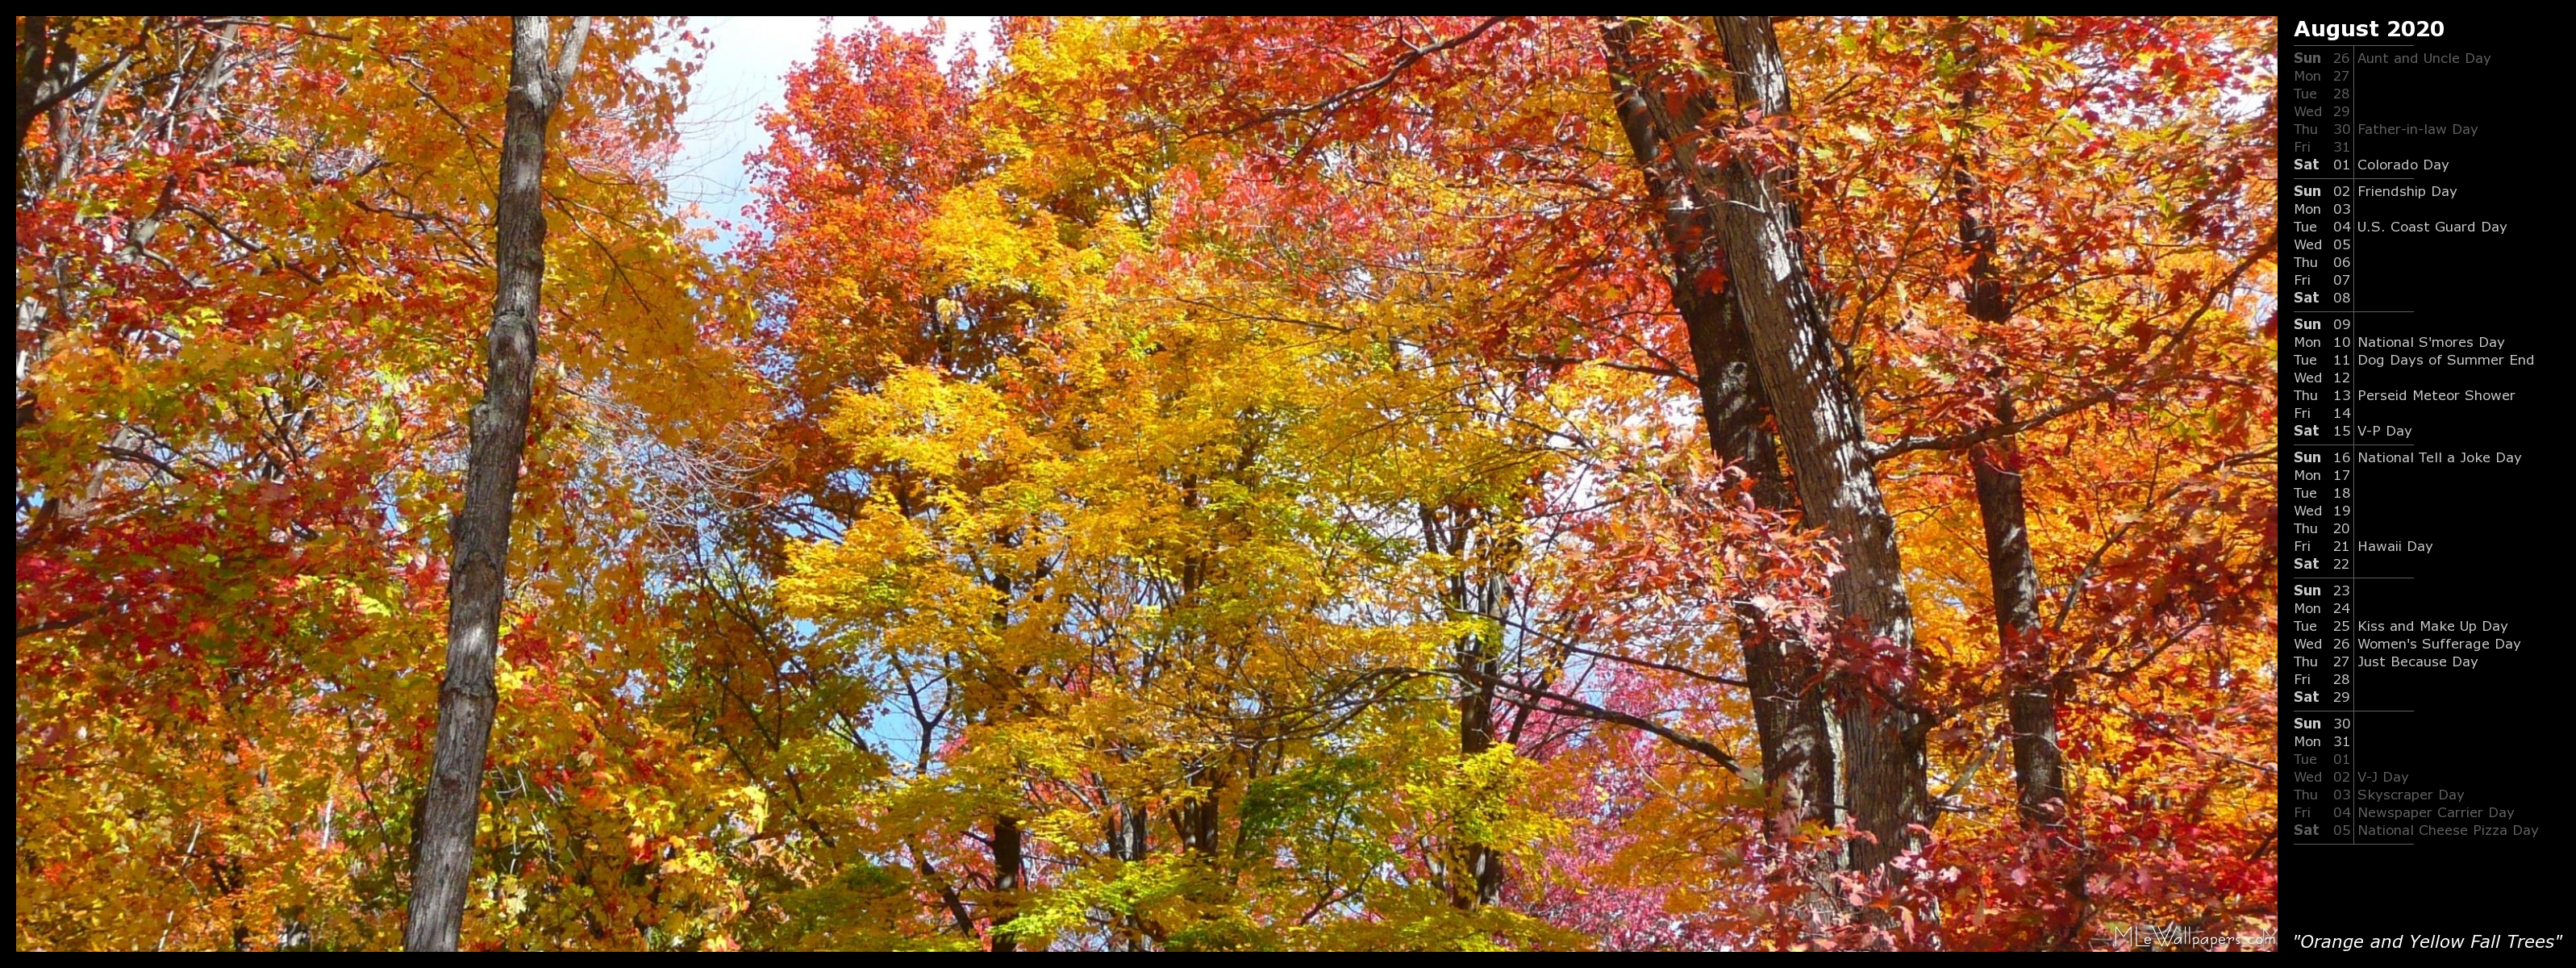 Orange And Yellow Fall Trees - Autumn - HD Wallpaper 